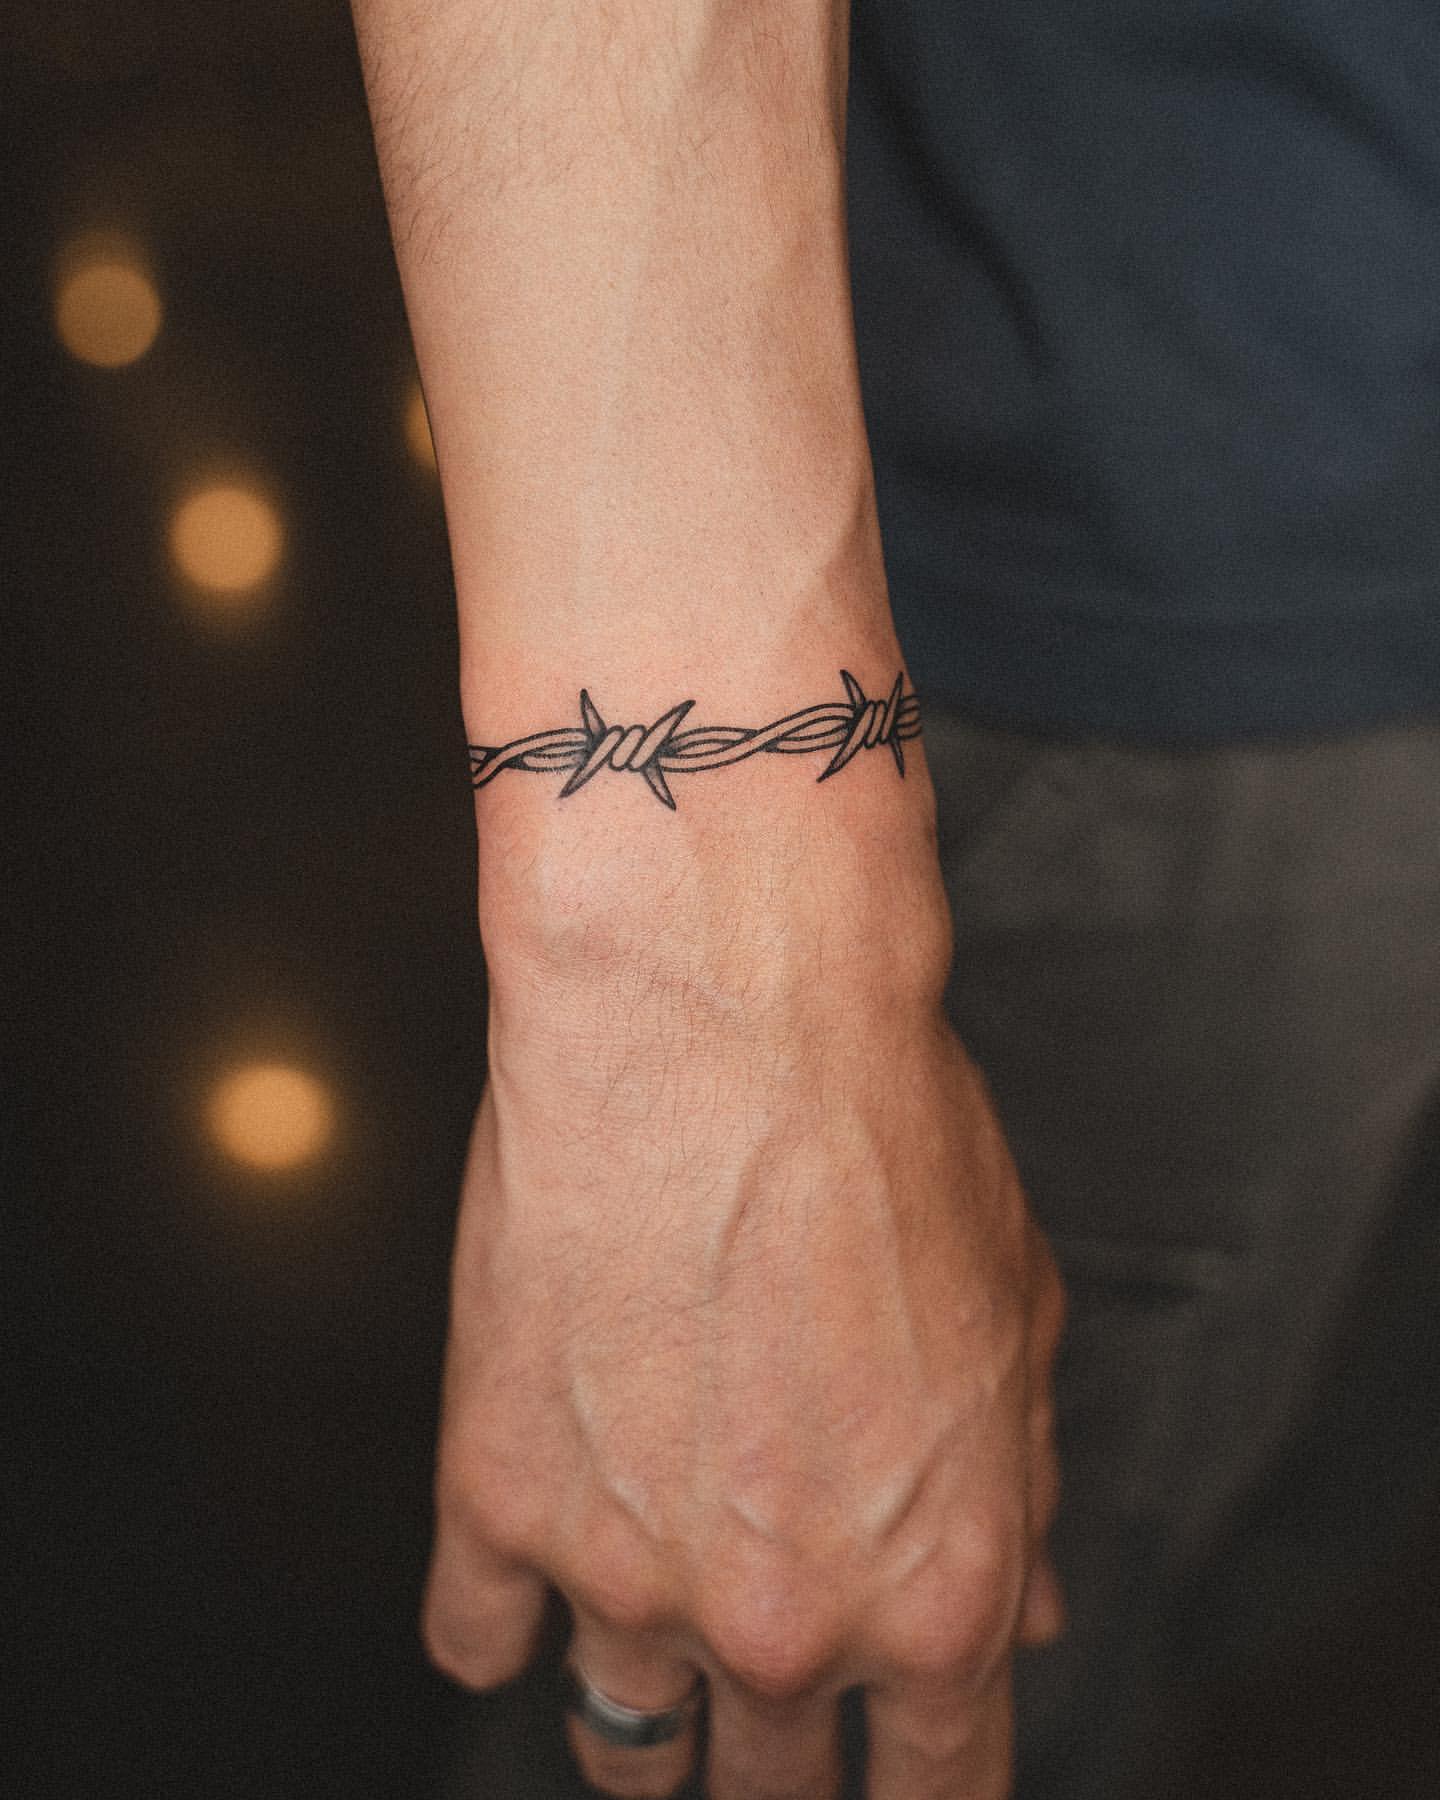 Bracelet tattoo for men // Band tattoo design on hand // arm band tattoo -  YouTube